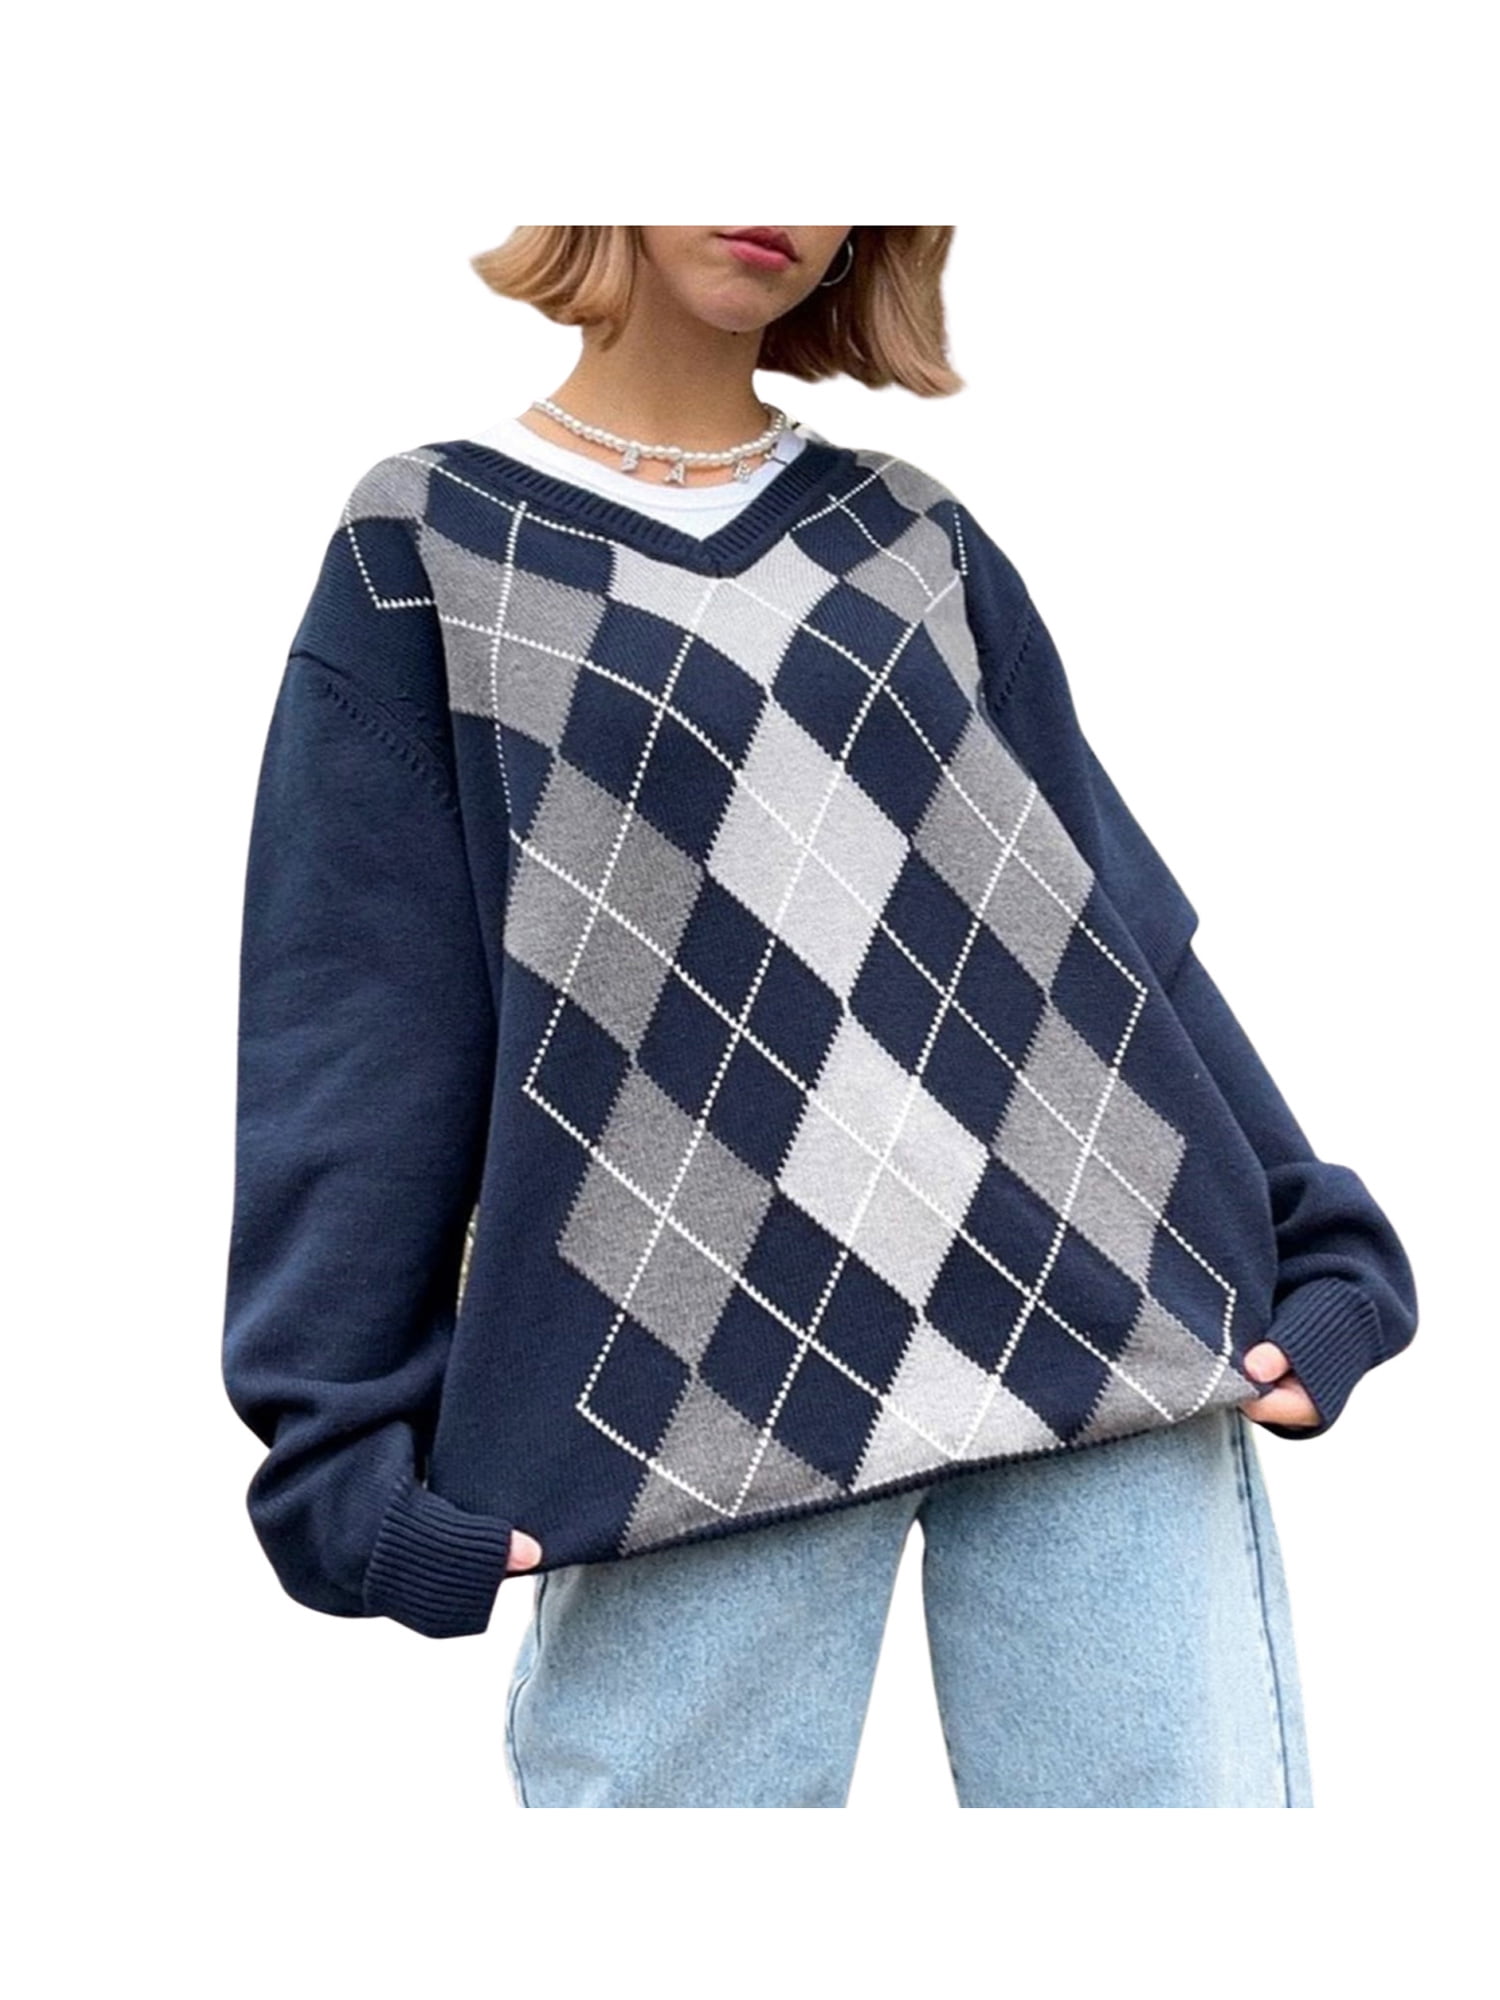 Women’s Y2K Sweater Vintage Loose Fit Crew Neck Knitwear Long Sleeve Pullover Preppy Style Top